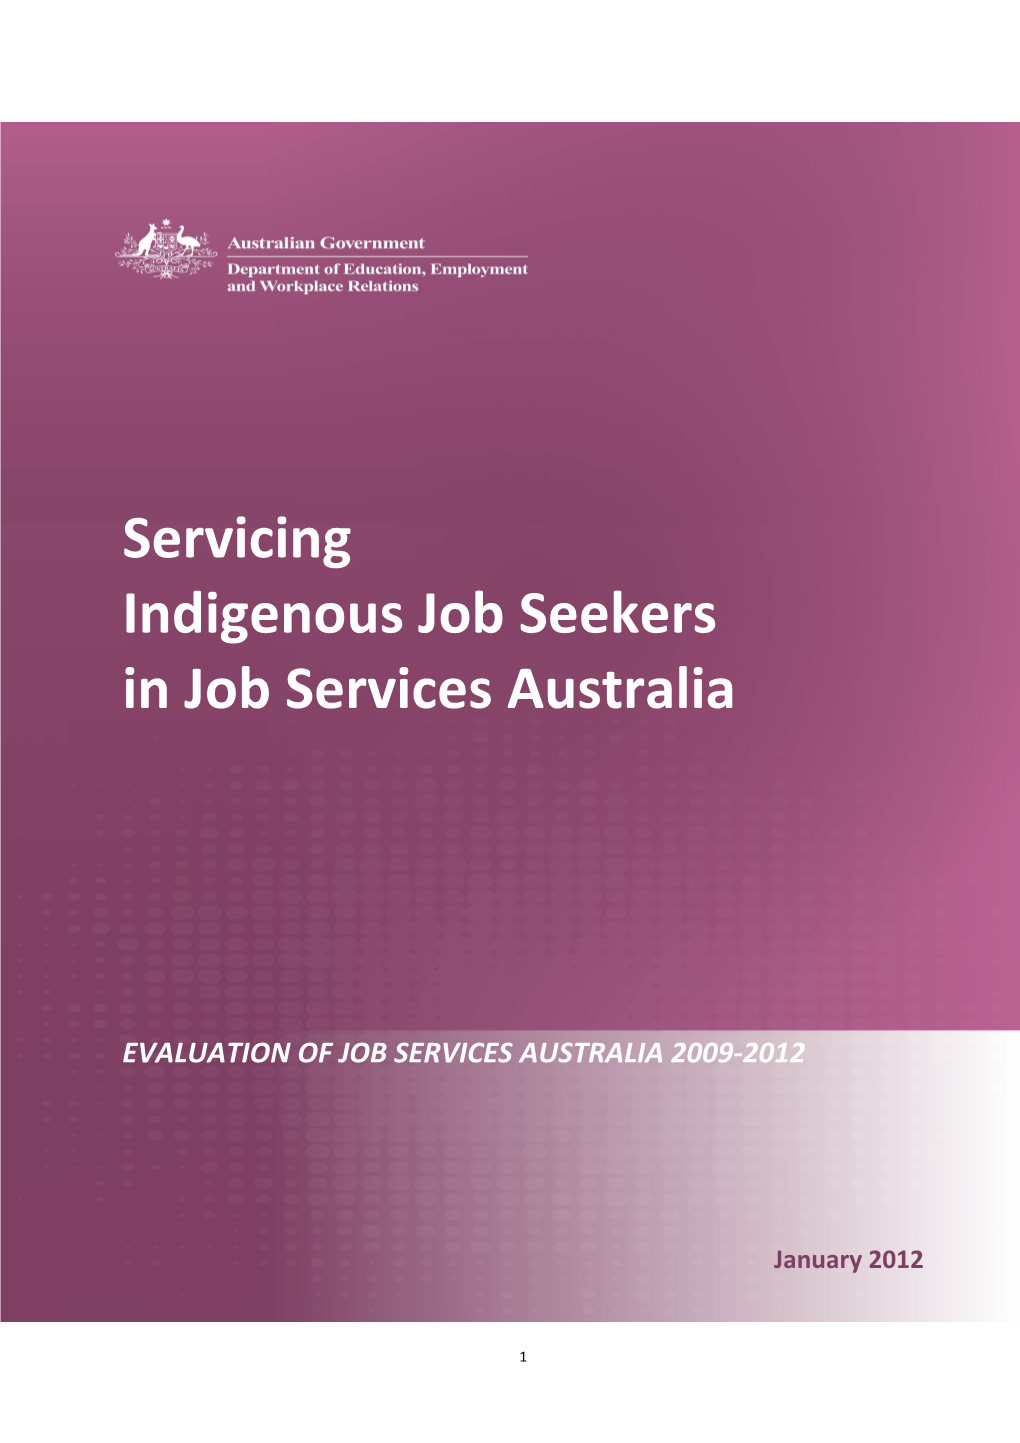 Evaluation of Job Services Australia 2009-2012 s2